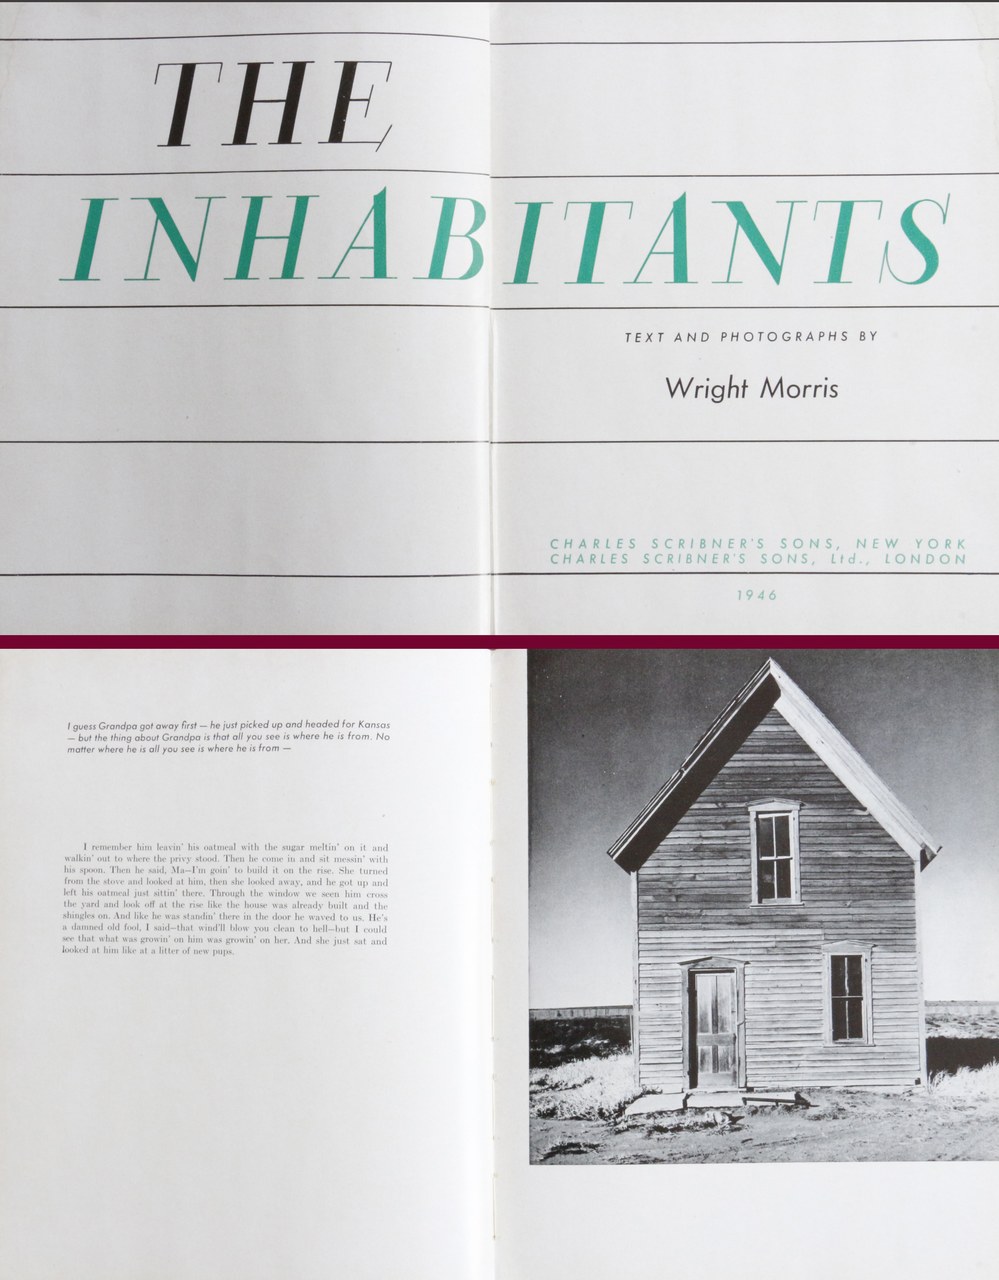 Wright Morris, The Inhabitants, New York, Charles Scribner’s Sons, 1946 (frontespizio e pagina interna)